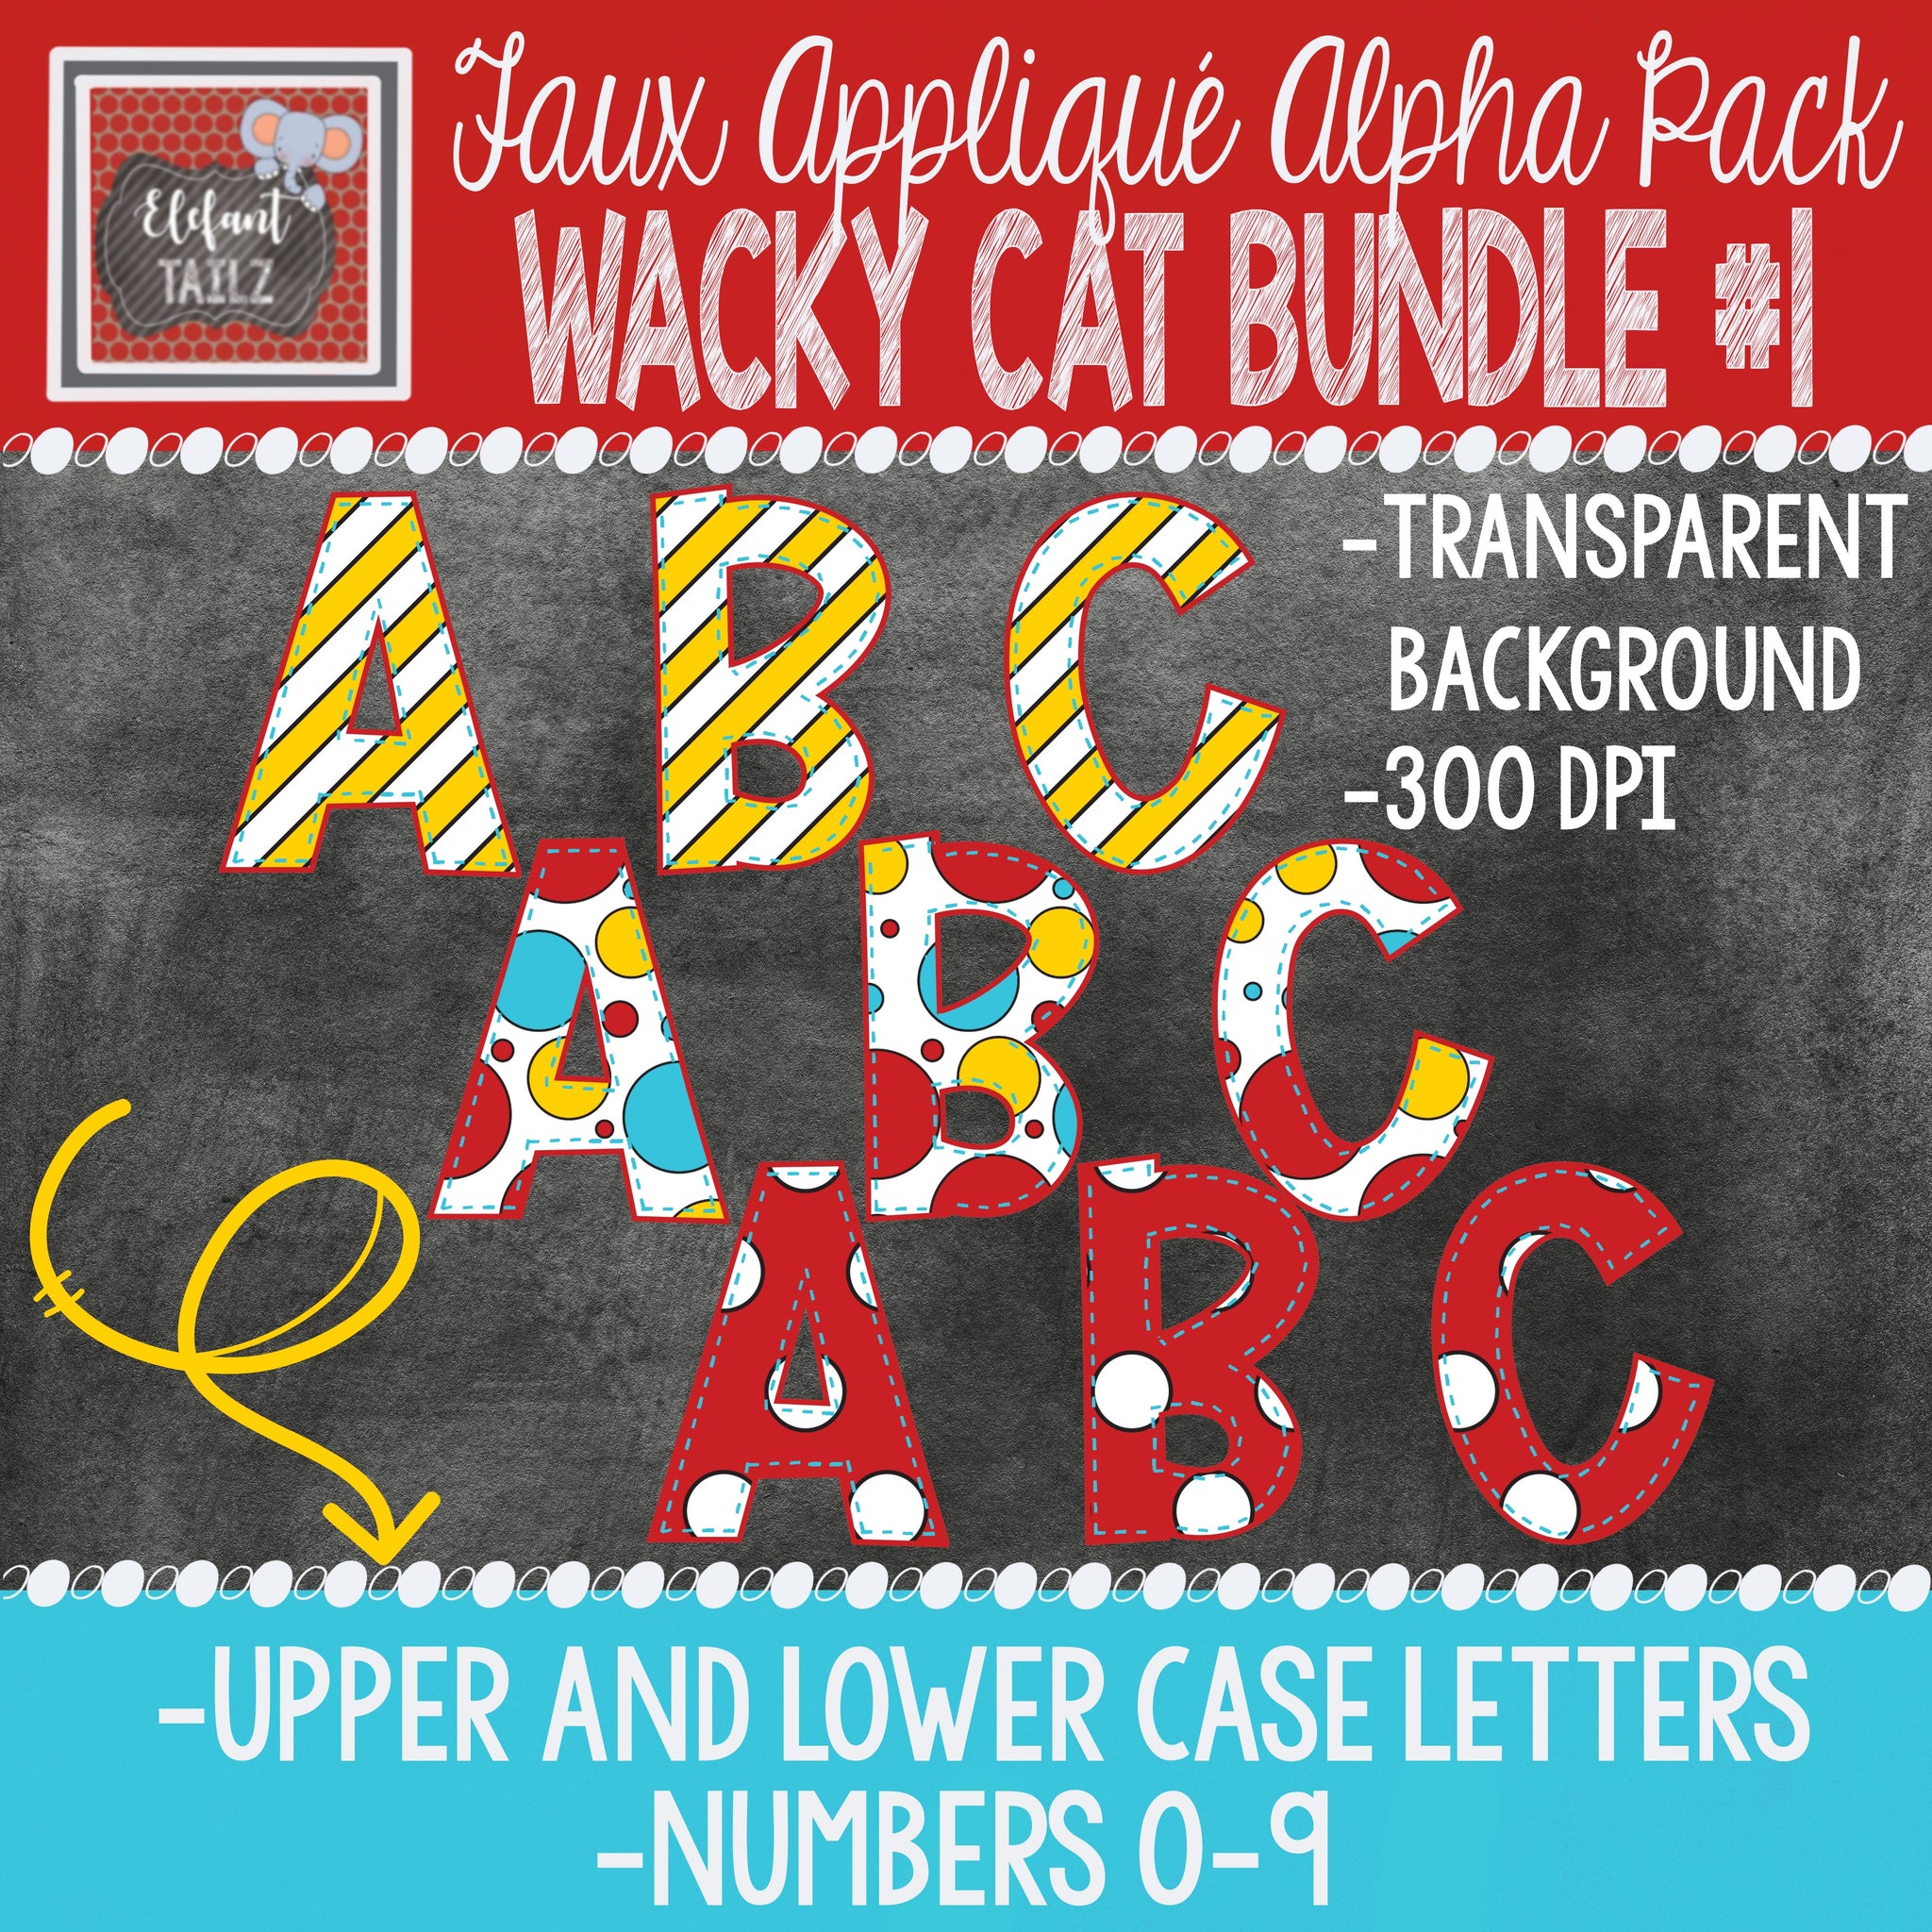 Alpha & Number Pack - Wacky Cat BUNDLE #1